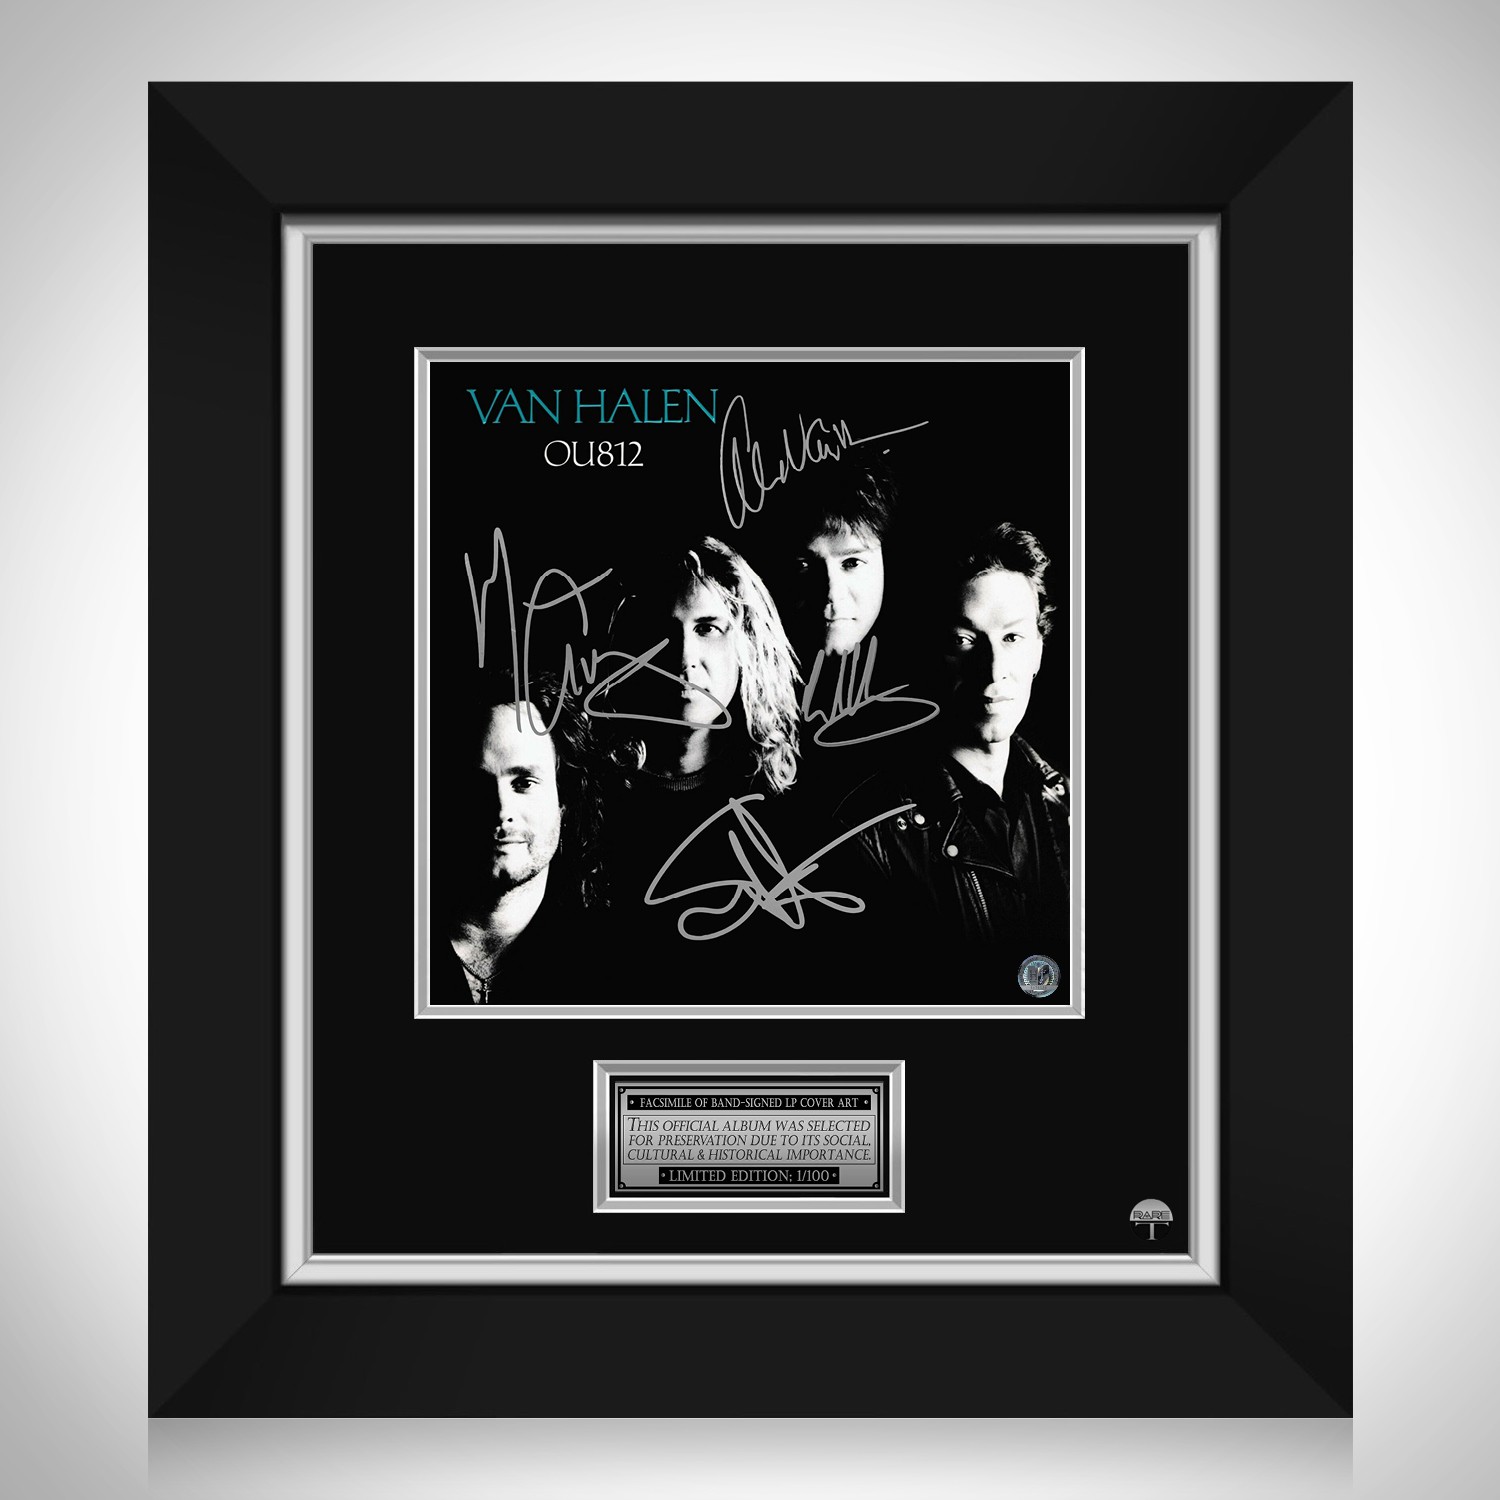 Van Halen - OU812 LP Cover Limited Signature Edition Custom Frame